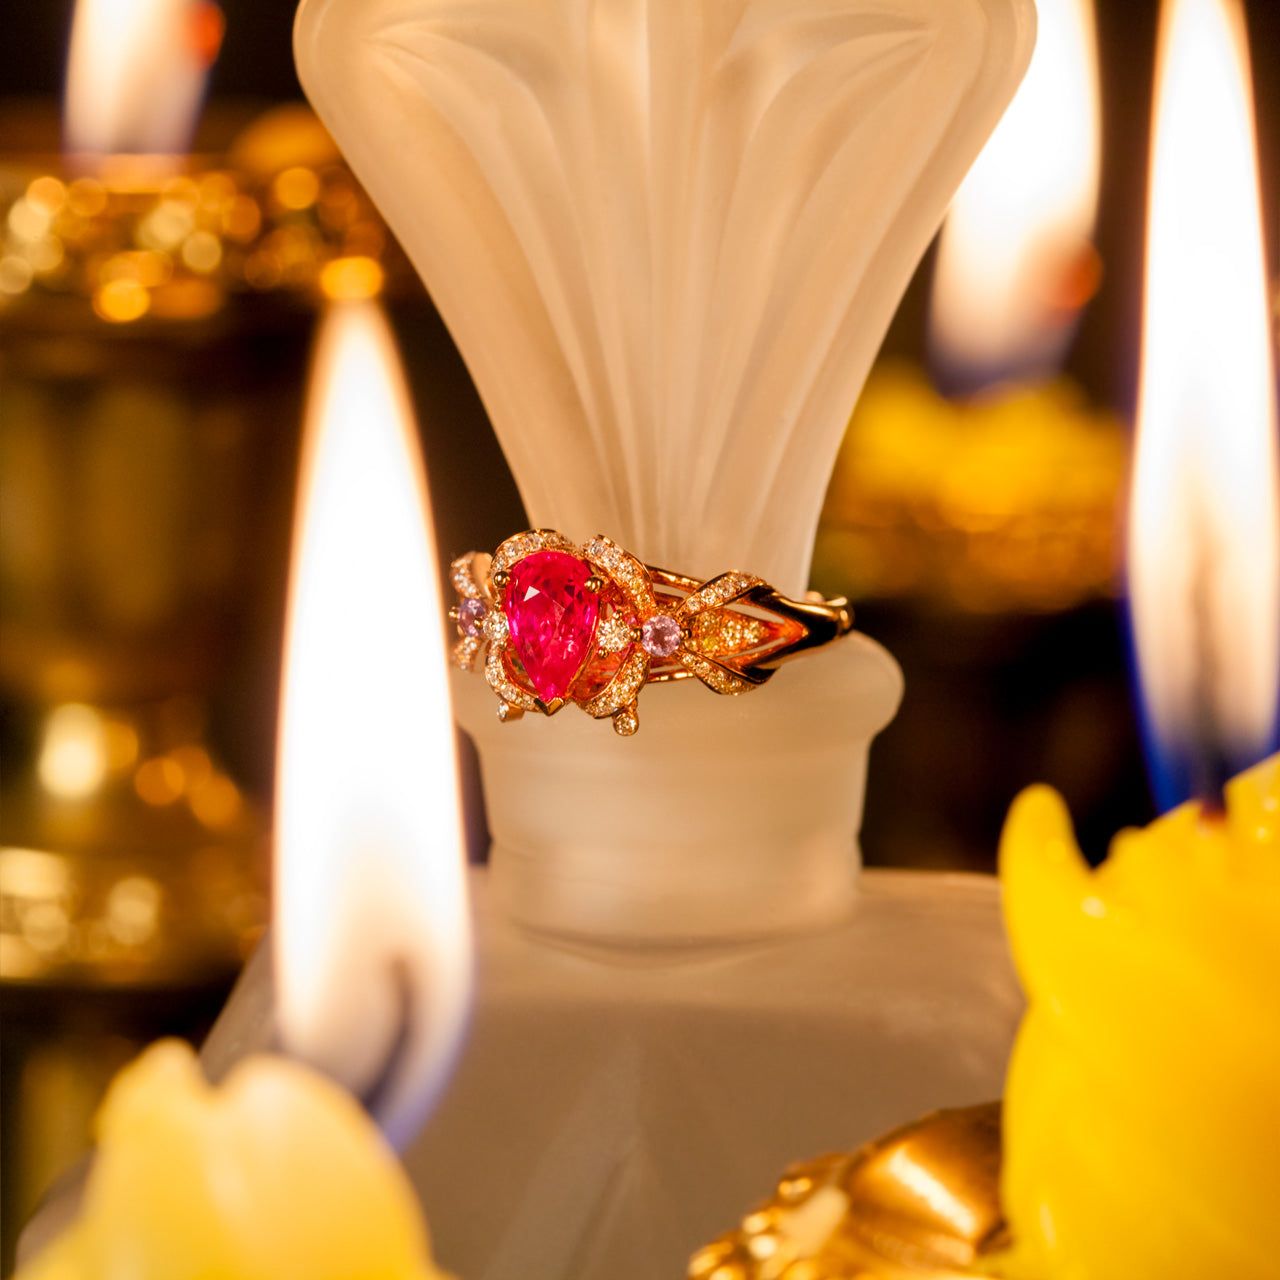 True Masterpiece of Jewelry Art. 1.94ctw Natural Ruby Alexandrite Diamond 18k Rose Gold Ring - The Alexandrite